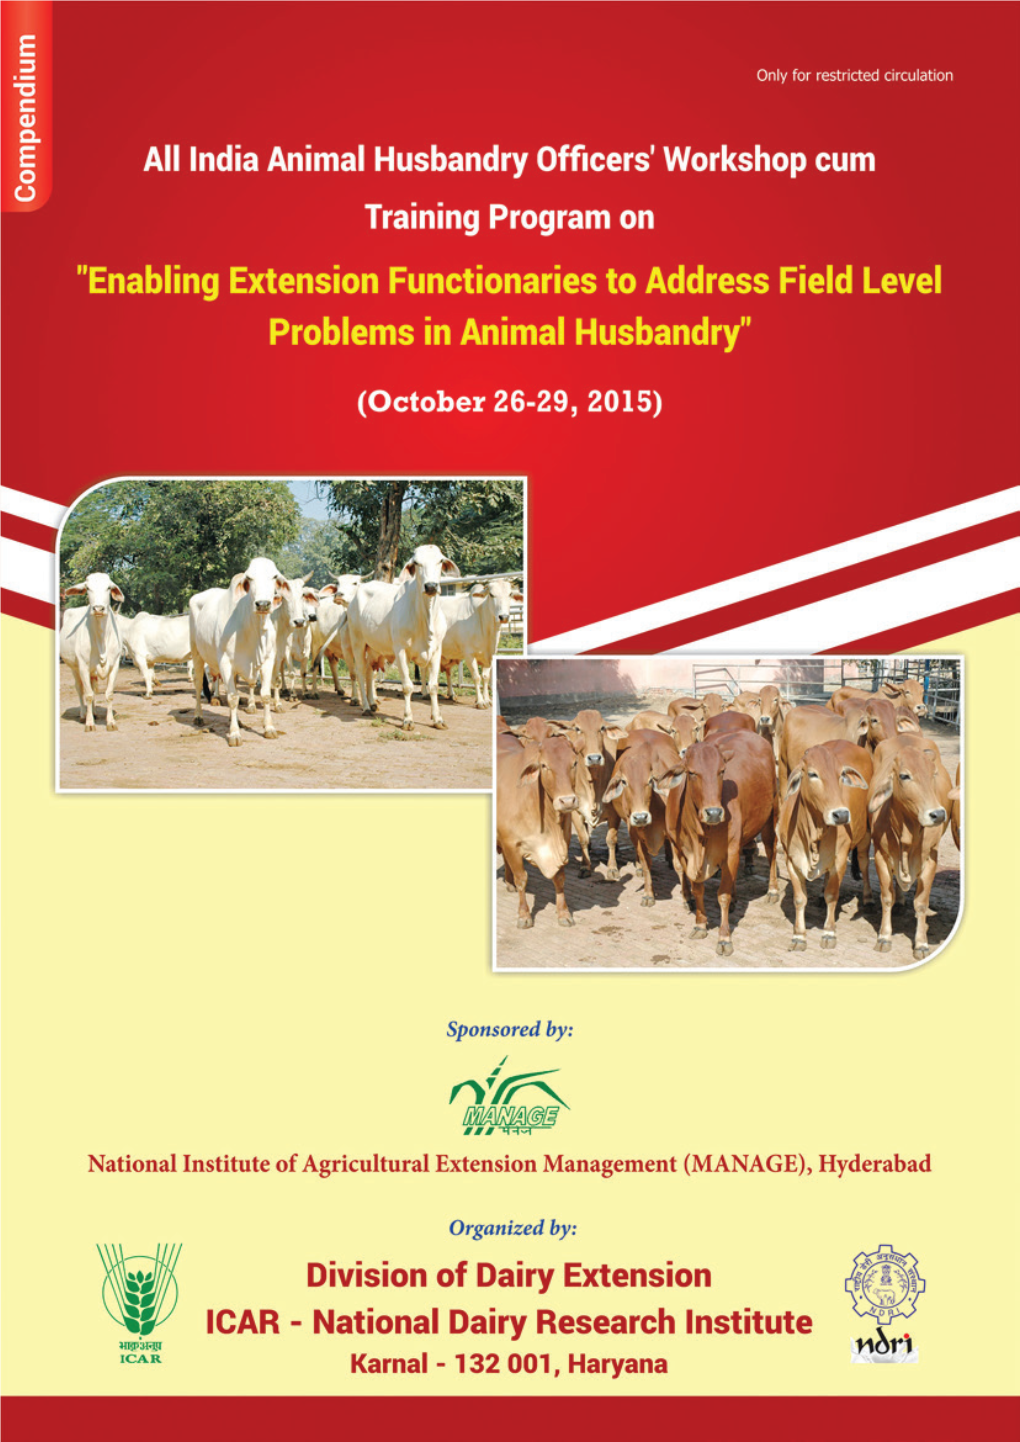 India Animal Husbandry Officers' Workshop Cum Training Program on Enabling Extension Functionaries to Address Field Level Problems in Animal Husbandry